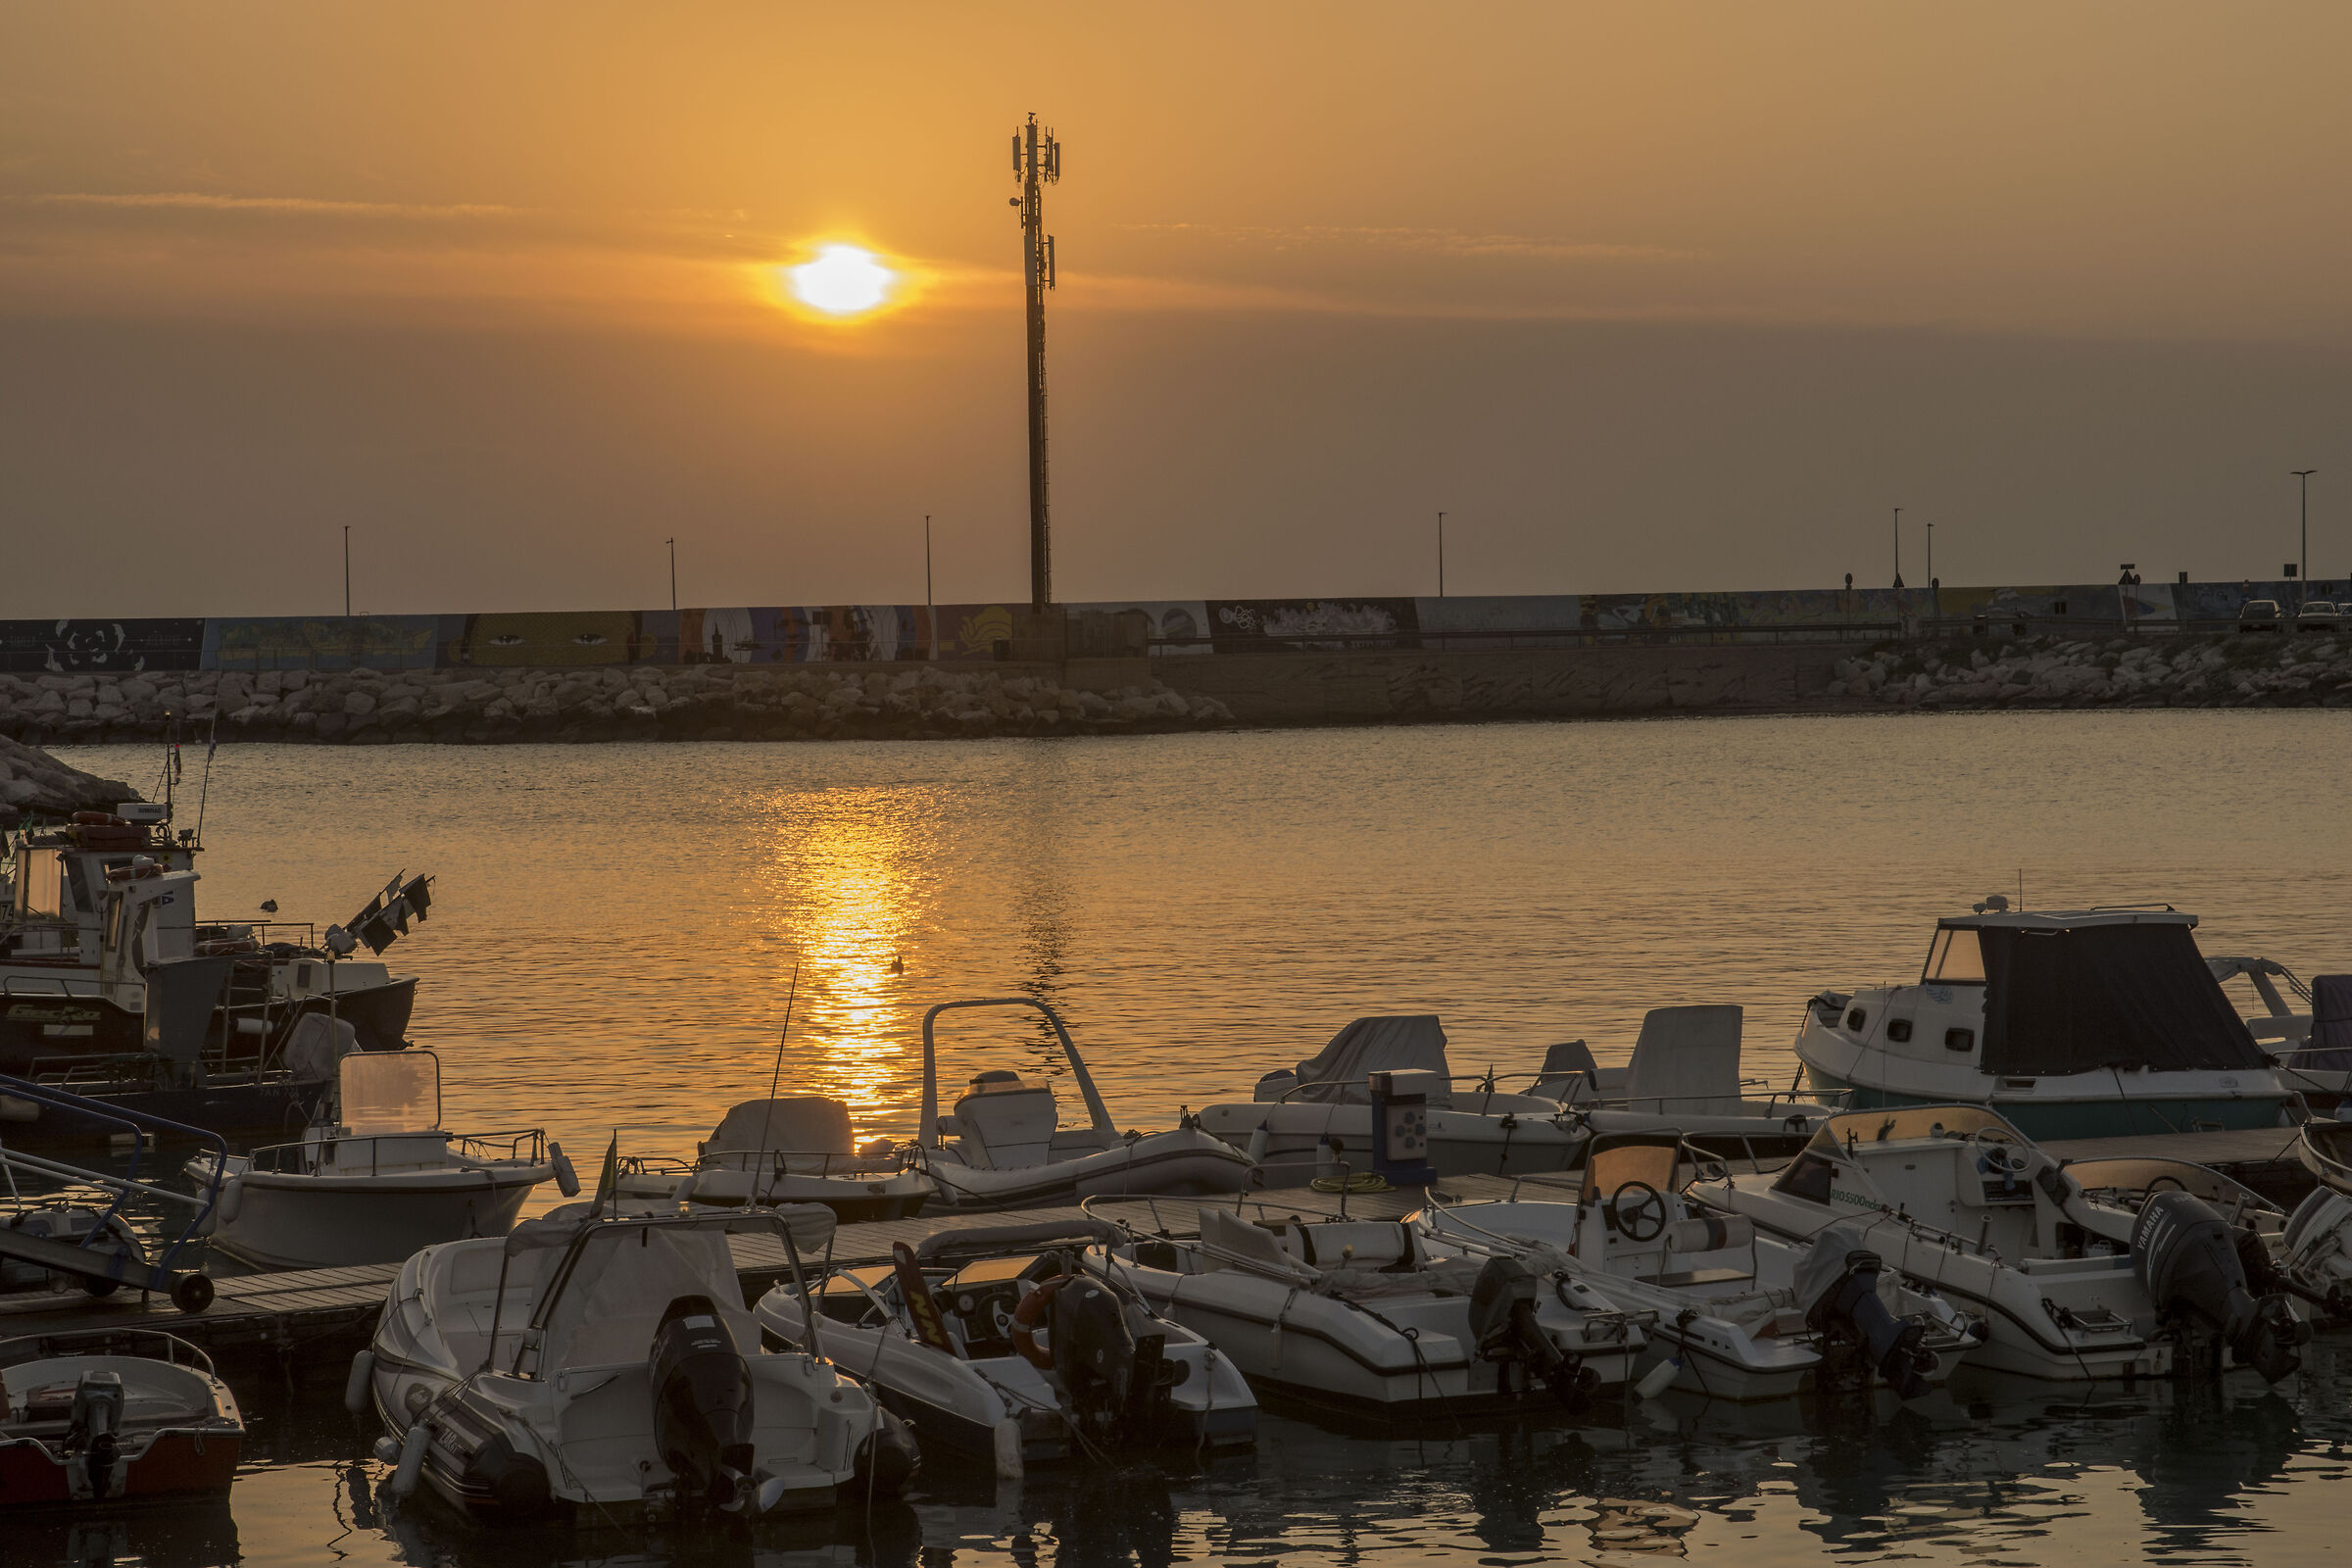 Sunrise over the Marina of Civitanova Marche...